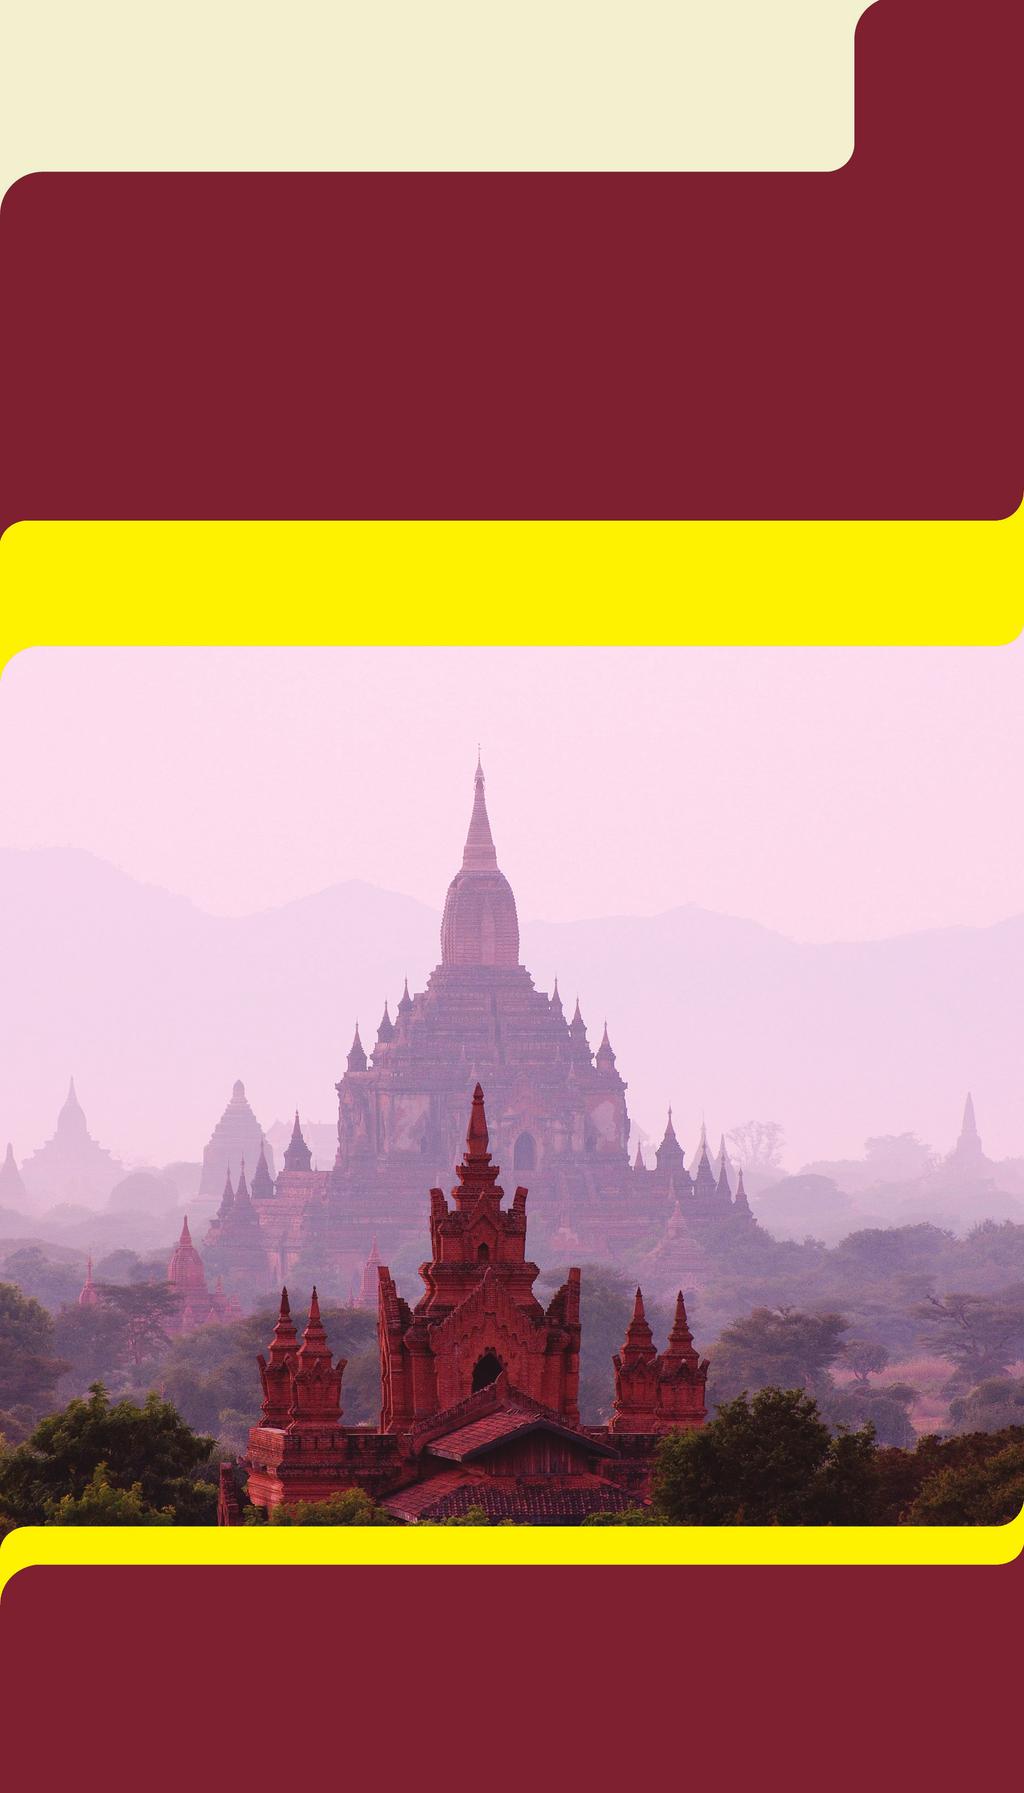 MYSTERIES OF MYANMAR Burmese Heritage Revealed October 24-November 6, 2014 14 days from $4,998 total